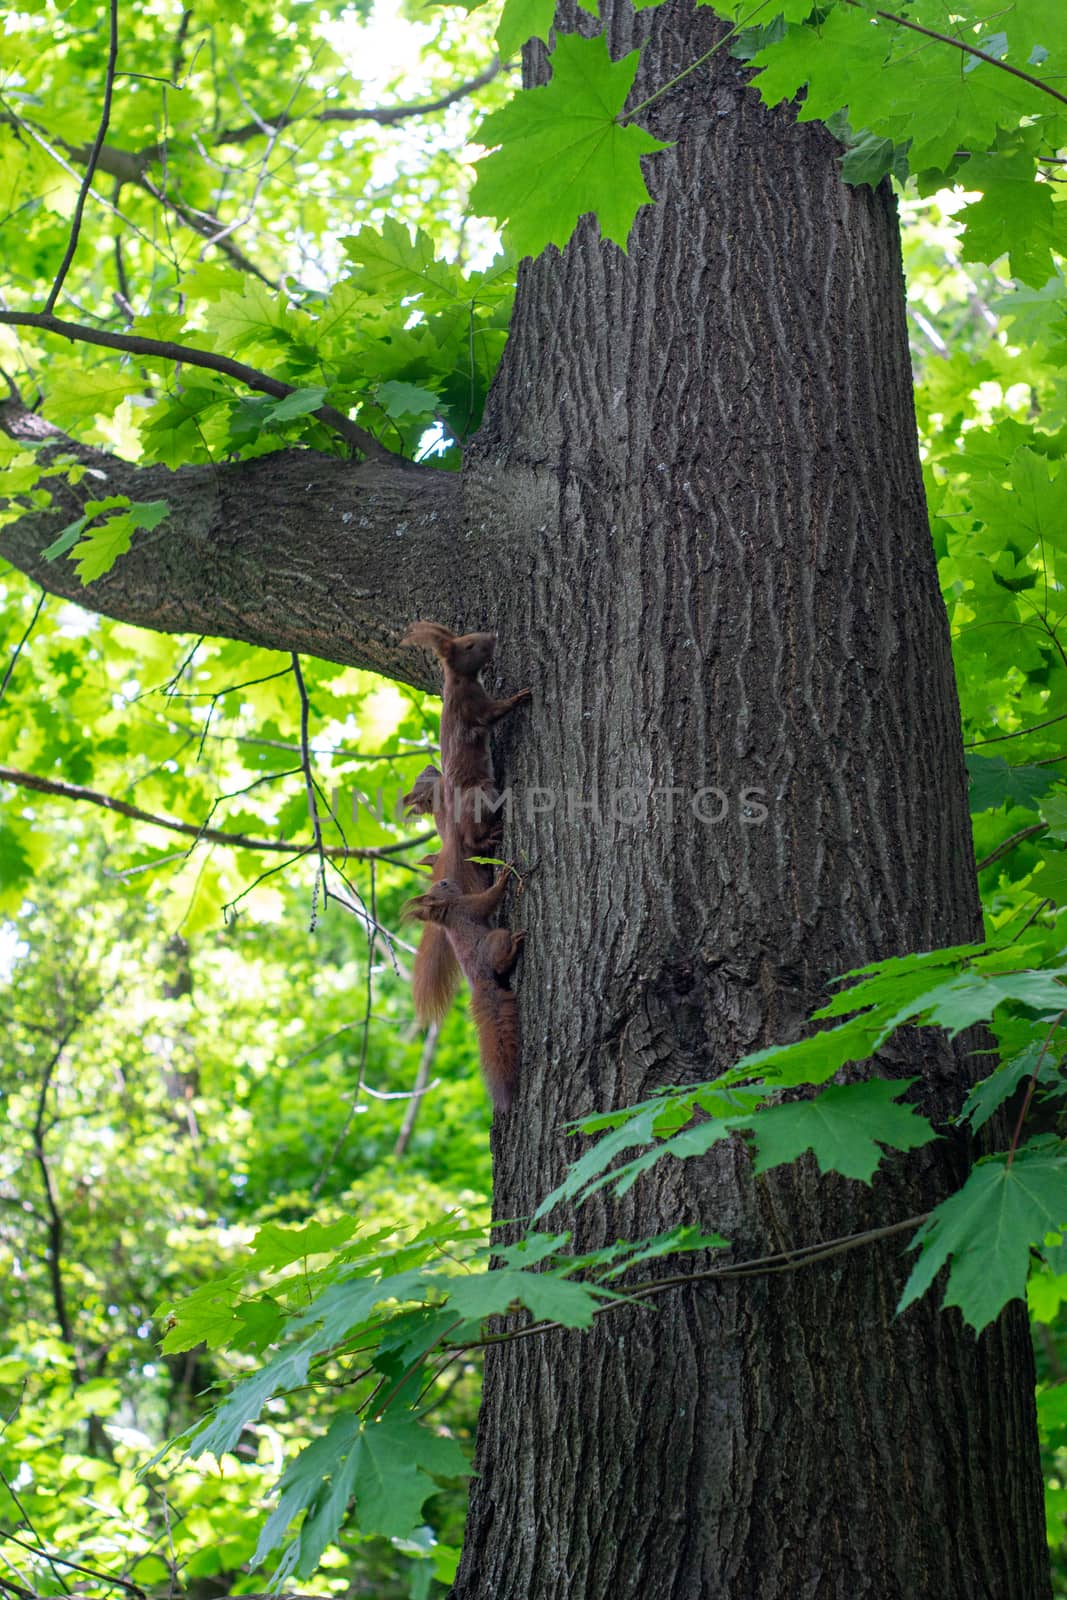 Squirrel family having fun on a tree by Serhii_Voroshchuk